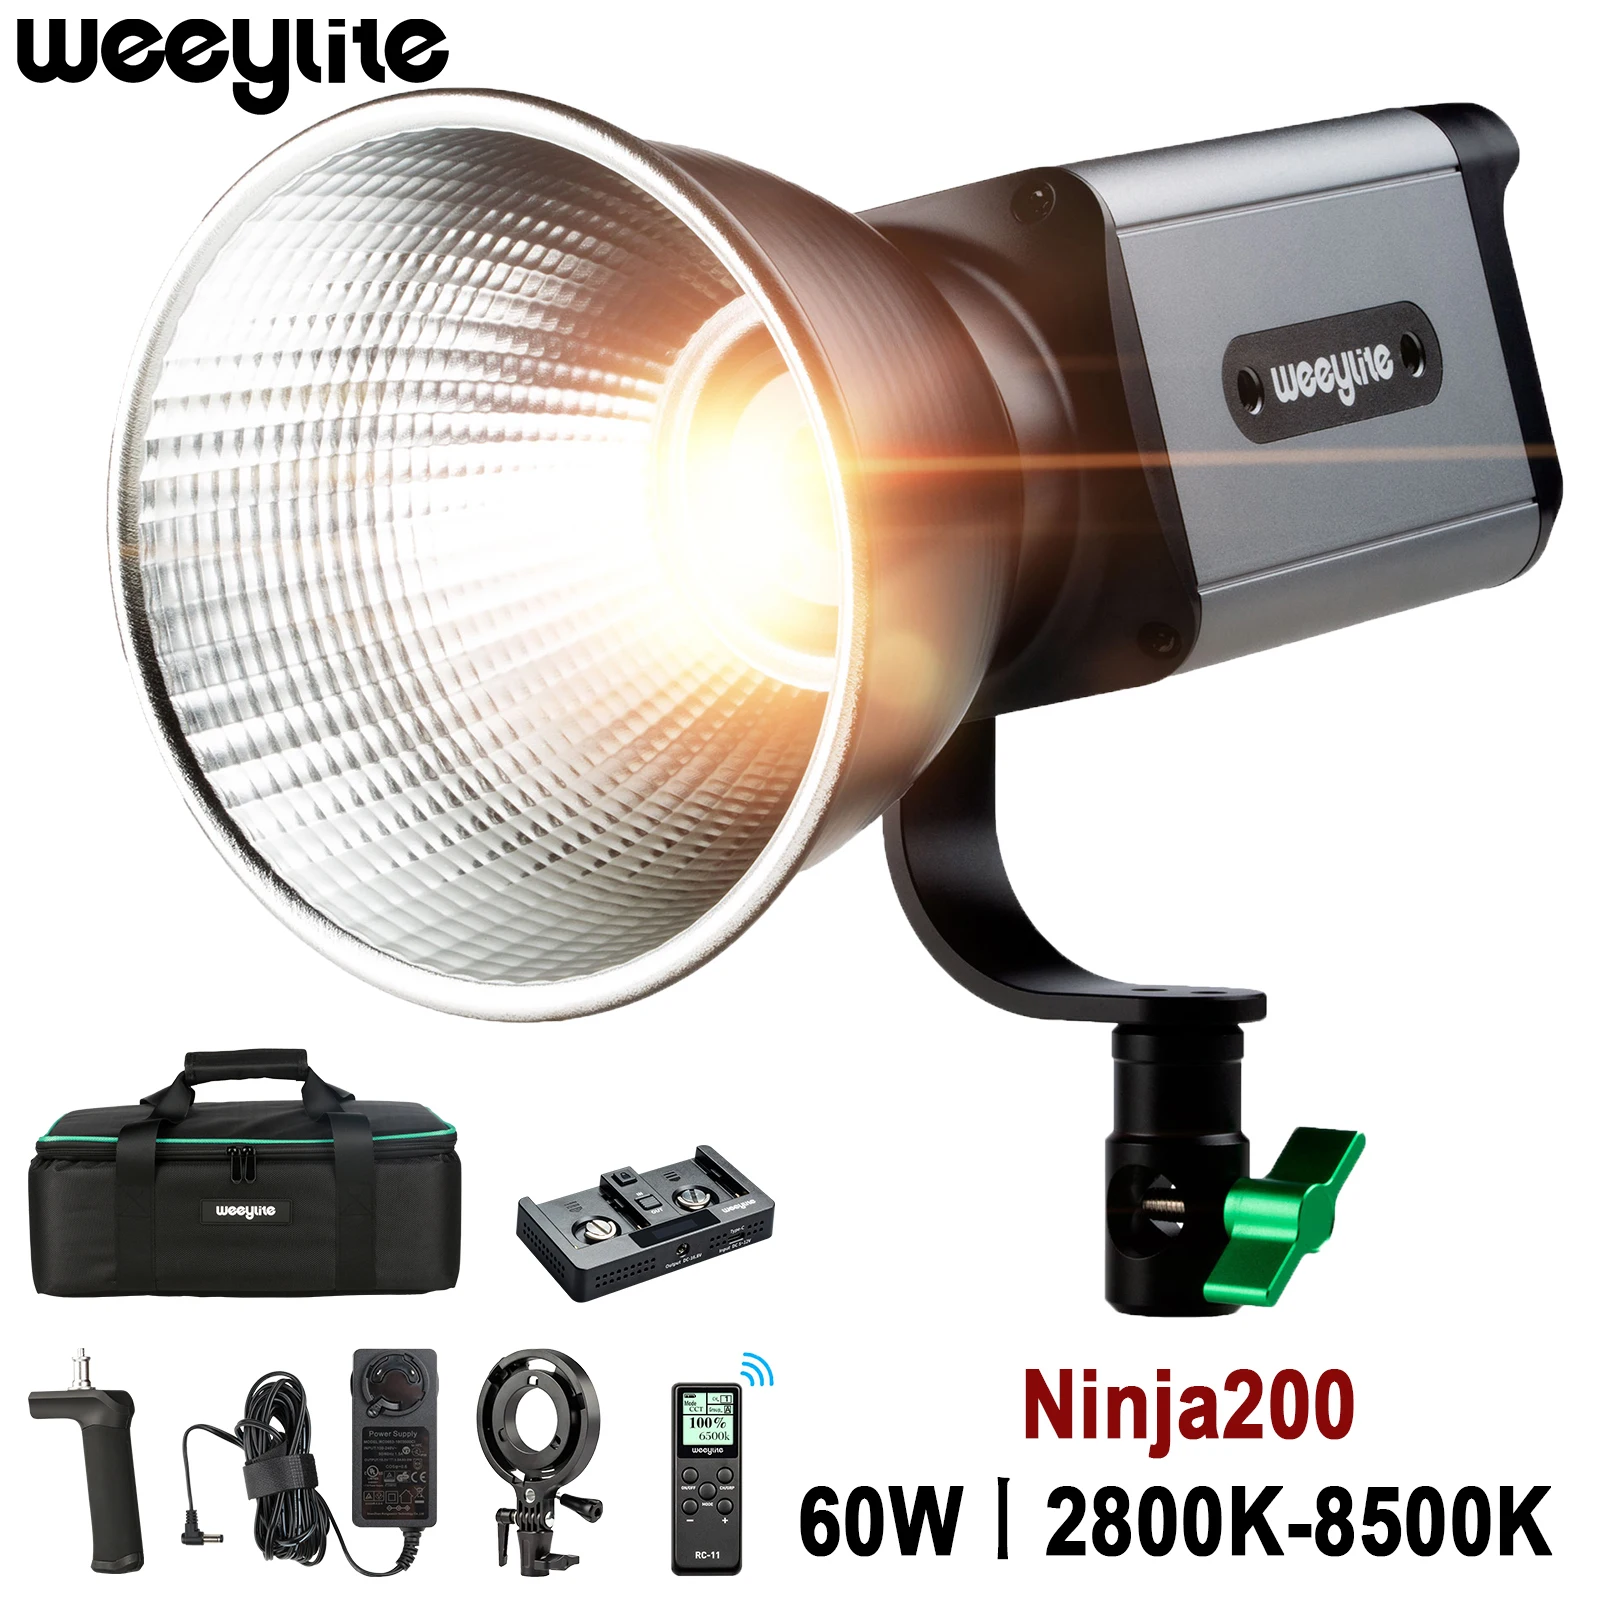 

Weeylite Ninja 200 LED Video COB Light 60W Bi-Color 2500-8500K CRI95 Continuous Output Bowens Mount for Studio Photography Shoot